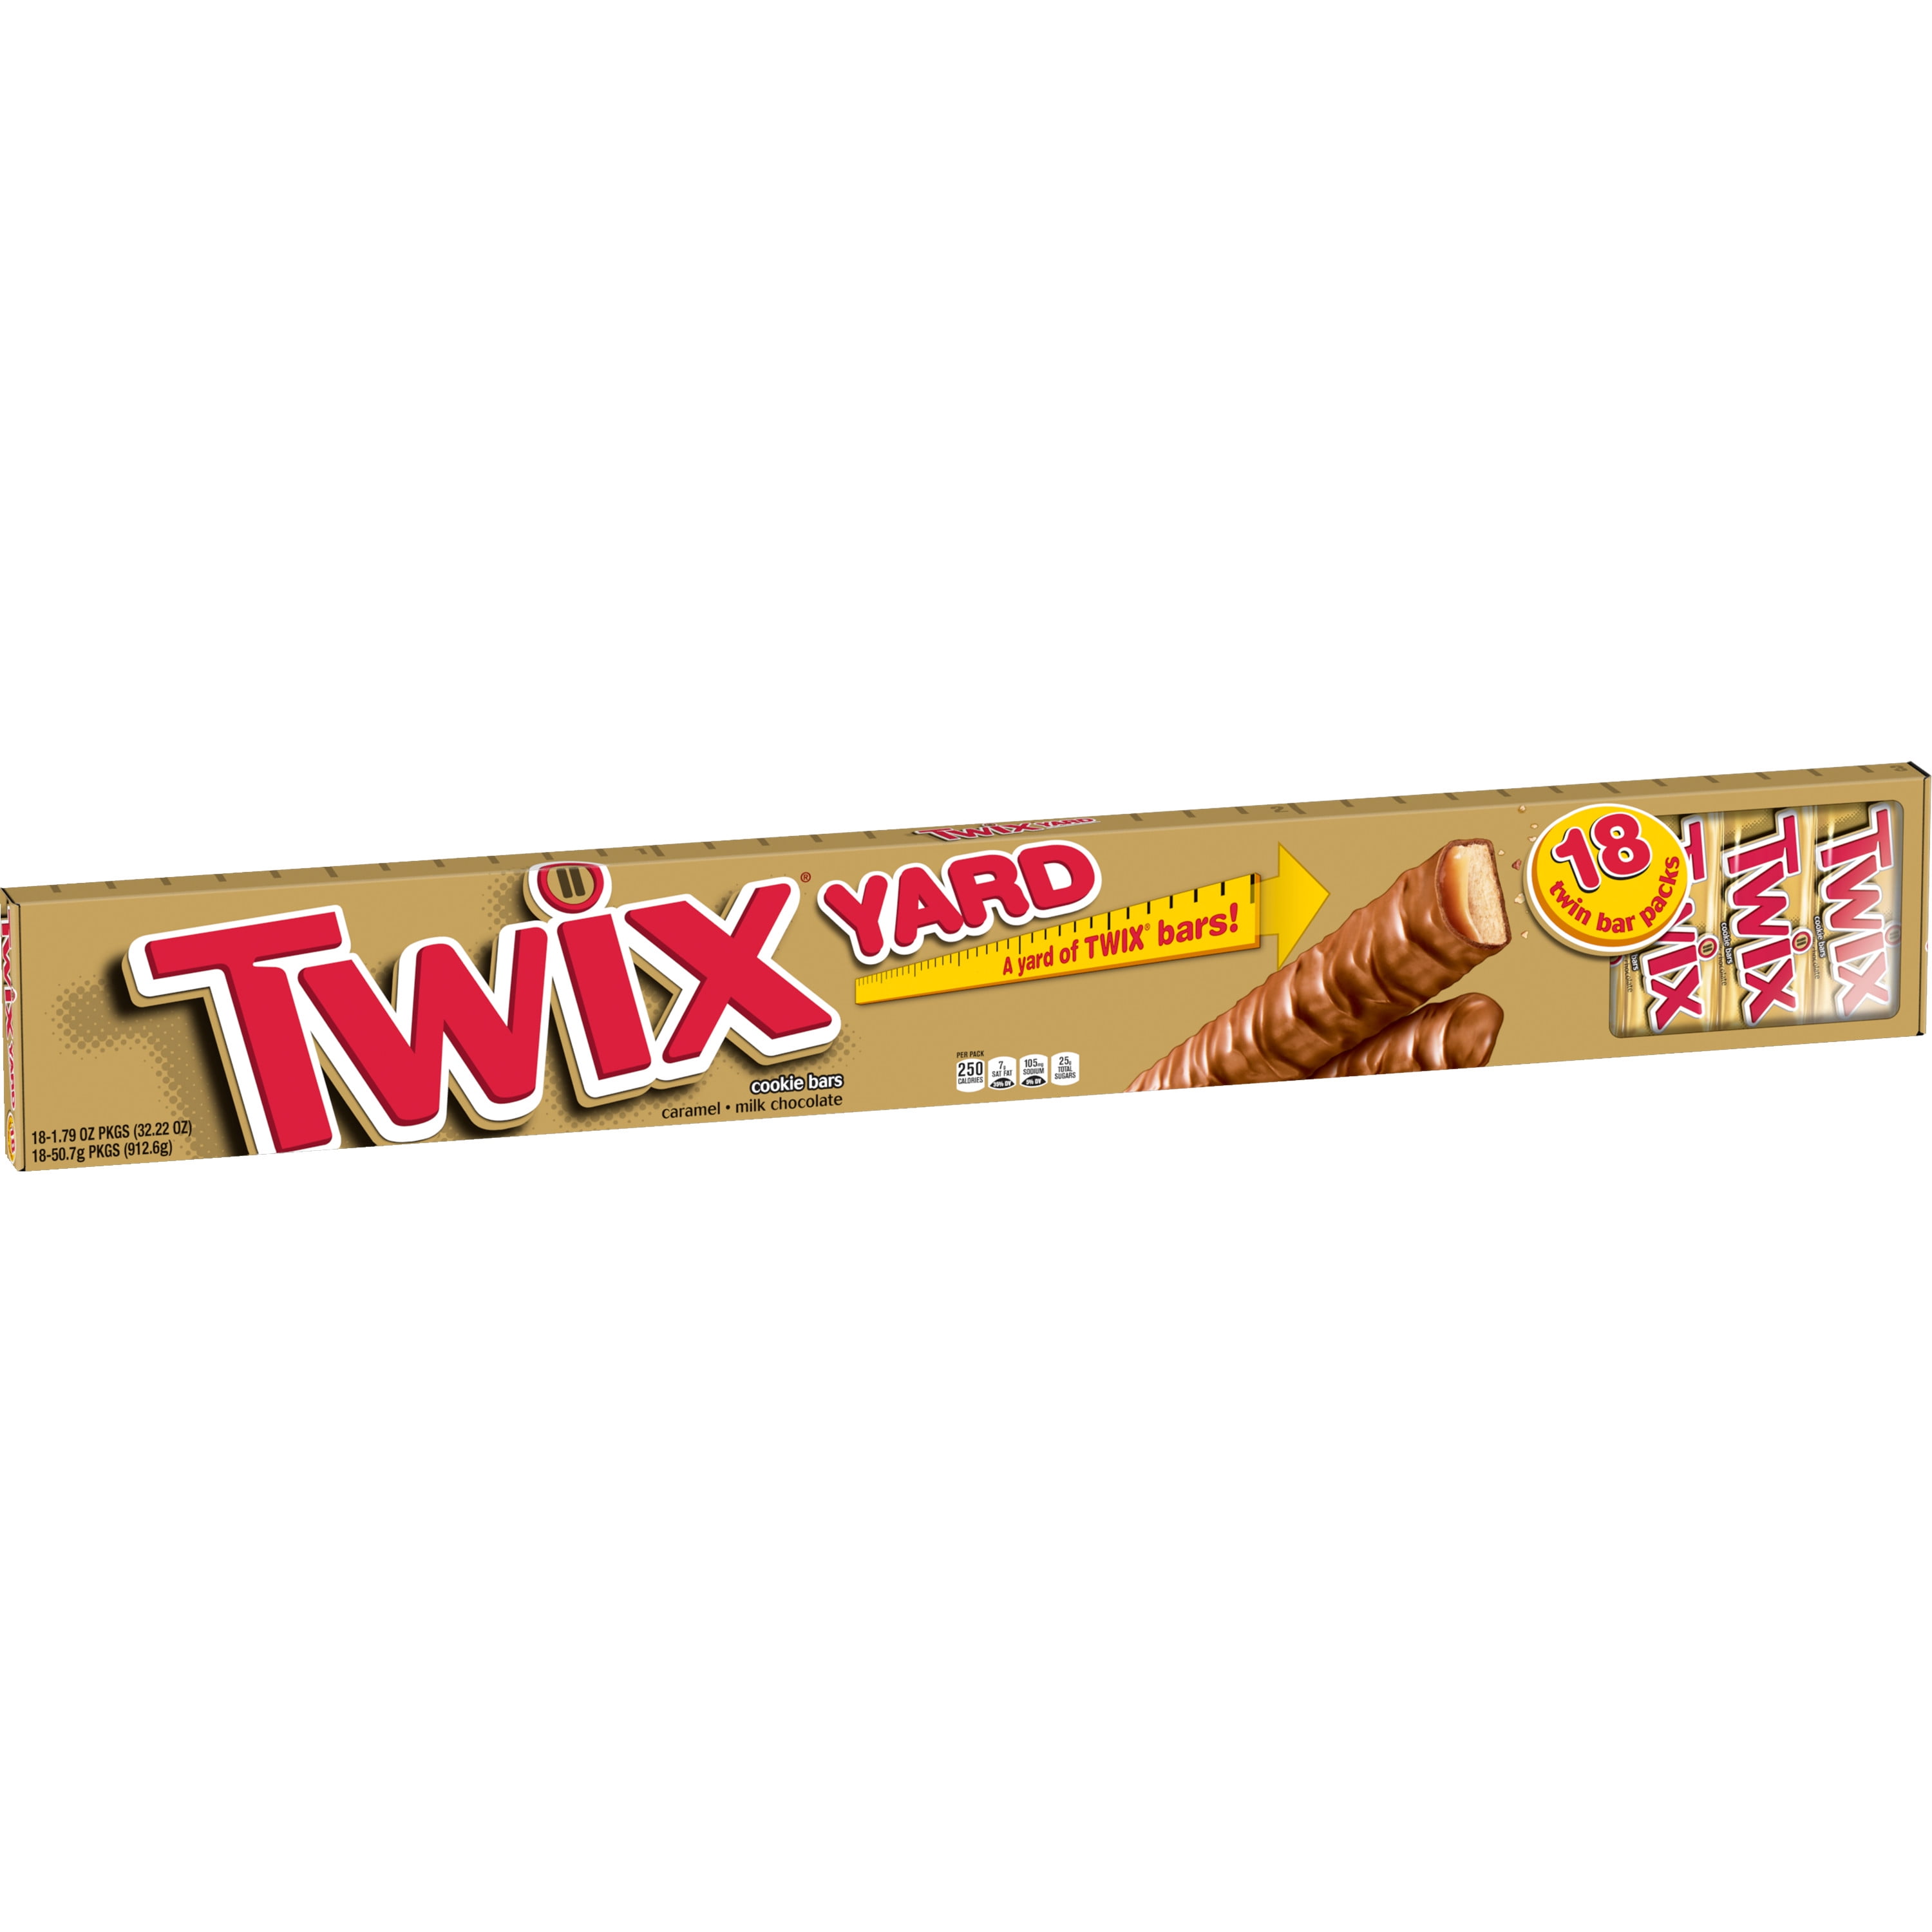 Twix Yard Christmas Full Size Chocolate Candy Bars - 18 bars per pack